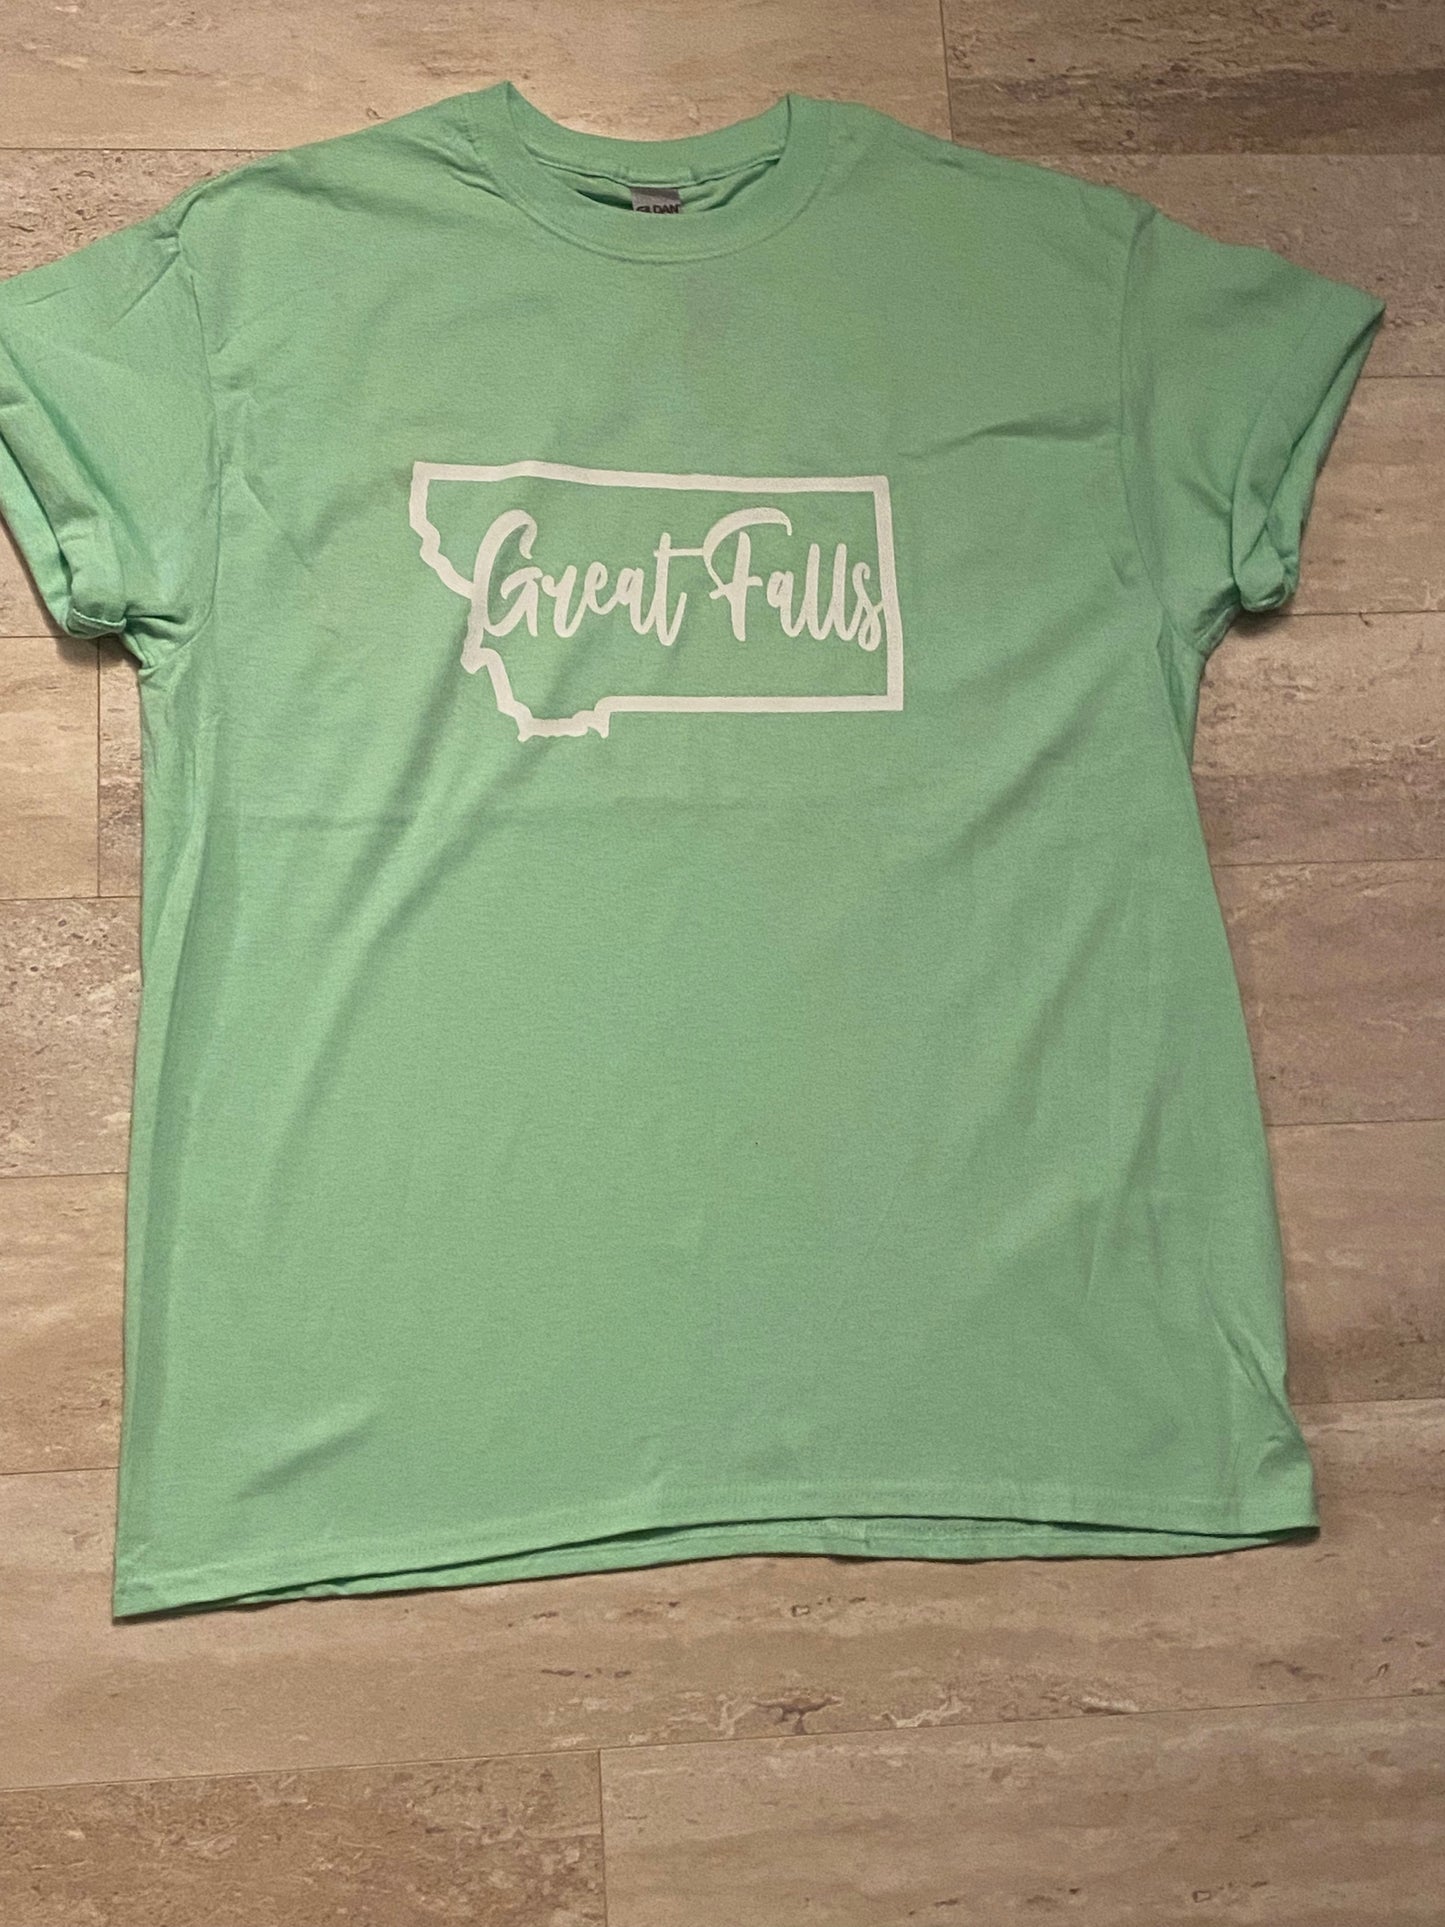 Great Falls, Montana adult T-shirt